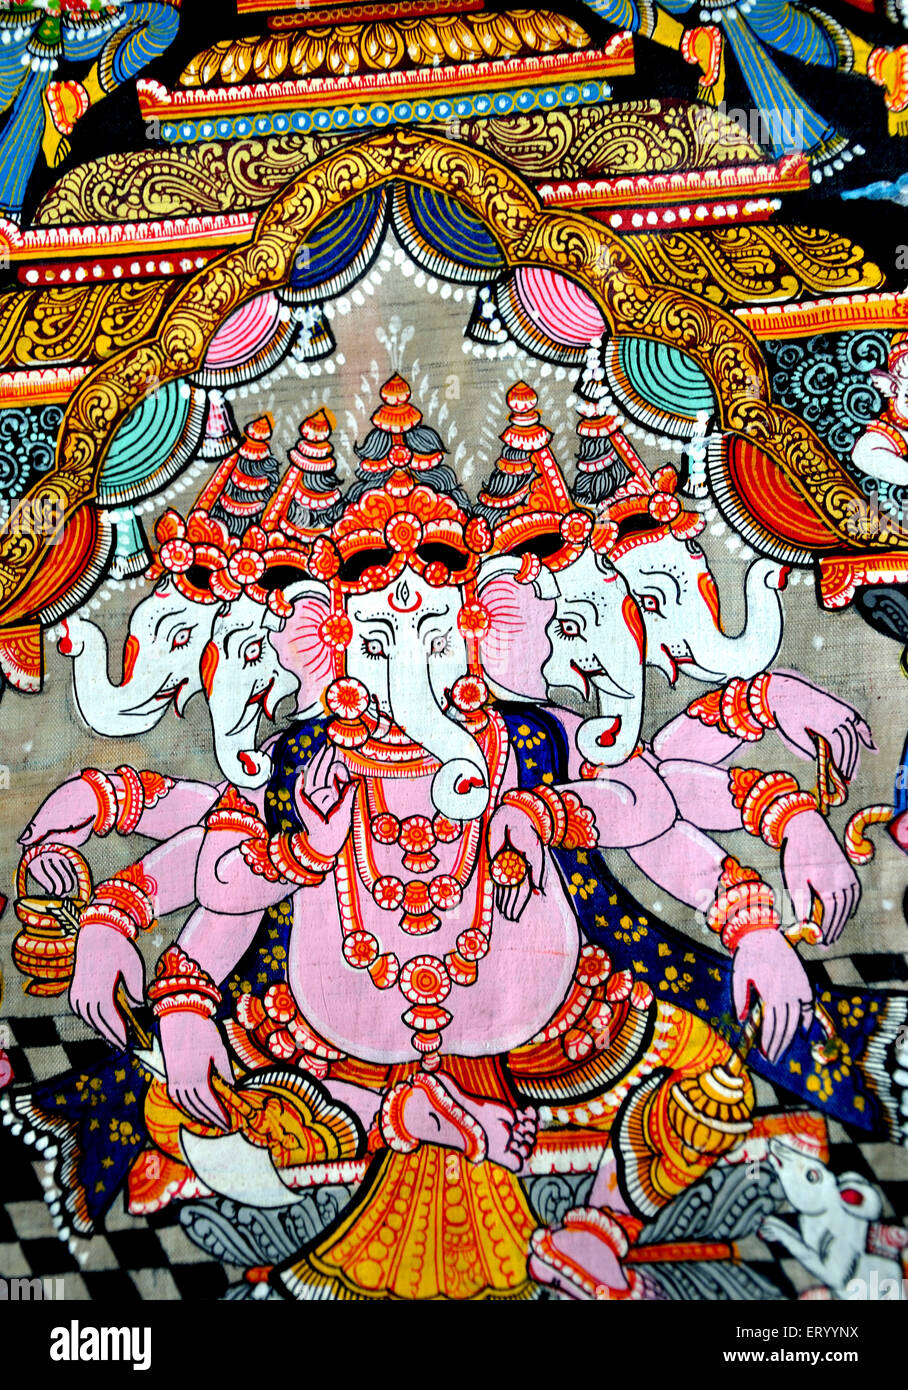 Lord ganpati background for ganesh chaturthi Vector Image